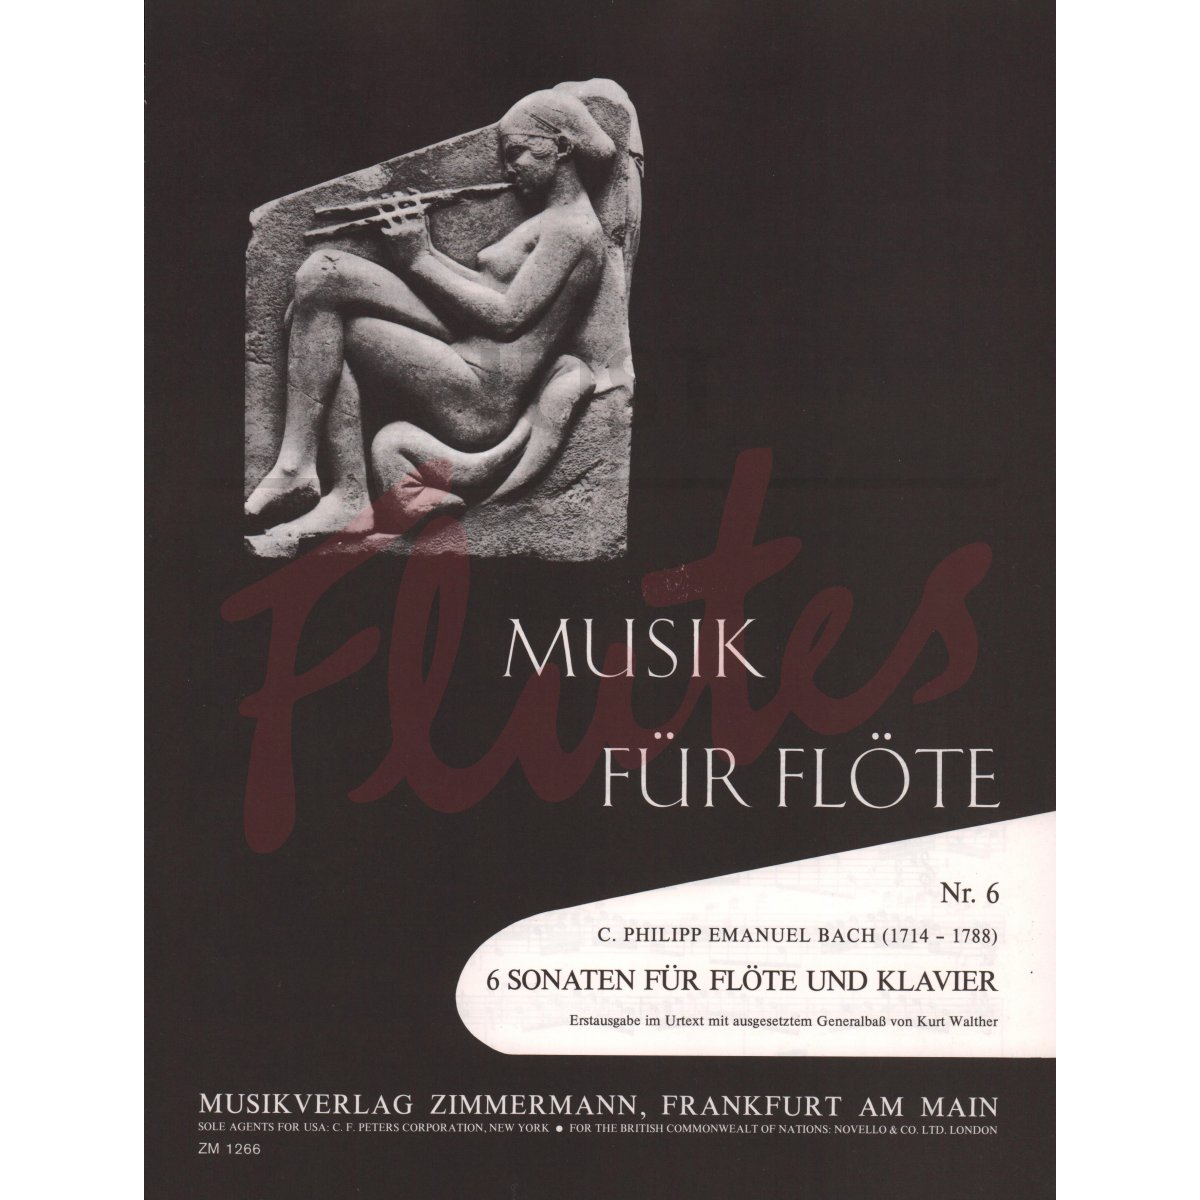 Sonata No. 6 in G Major for Flute and Piano